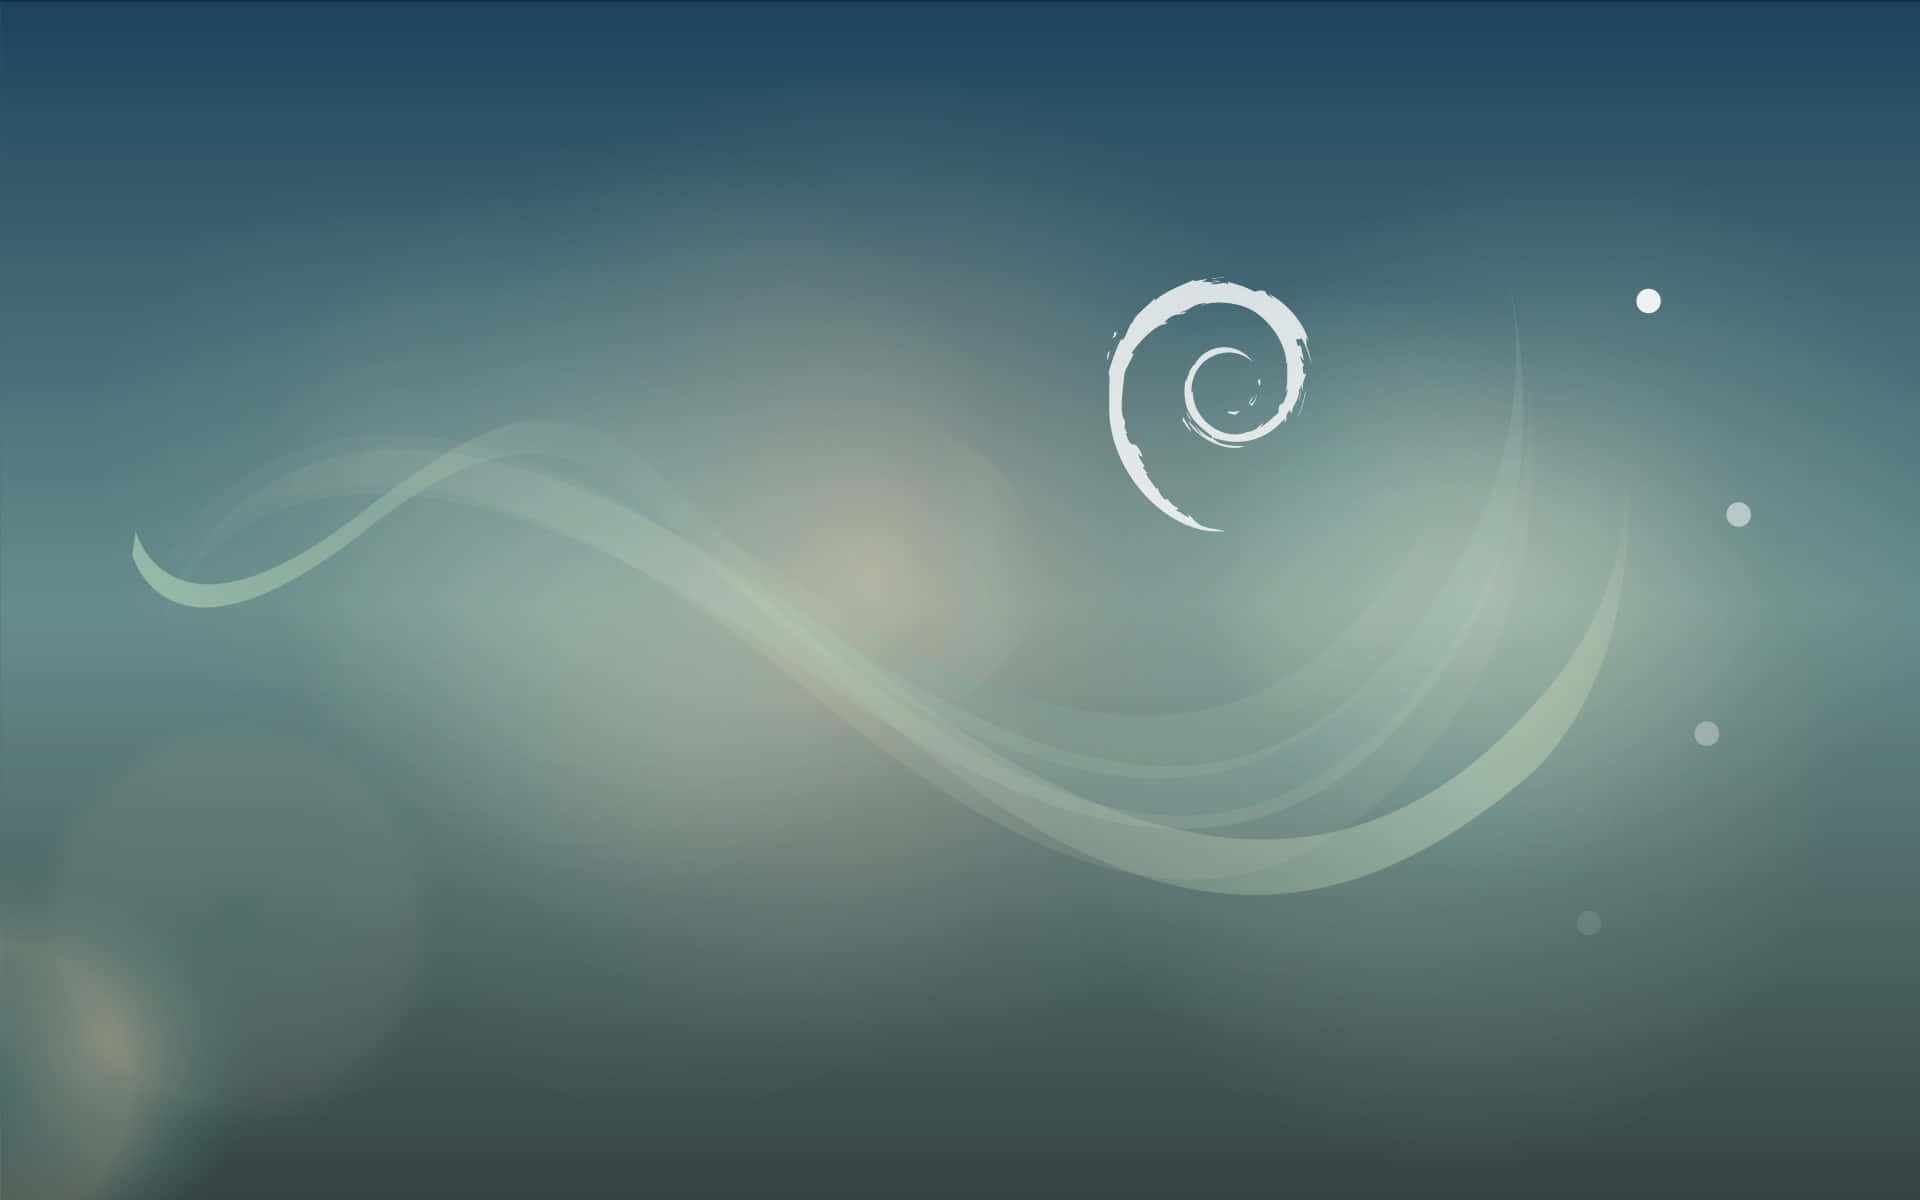 Debian Abstract Swirl Background Wallpaper